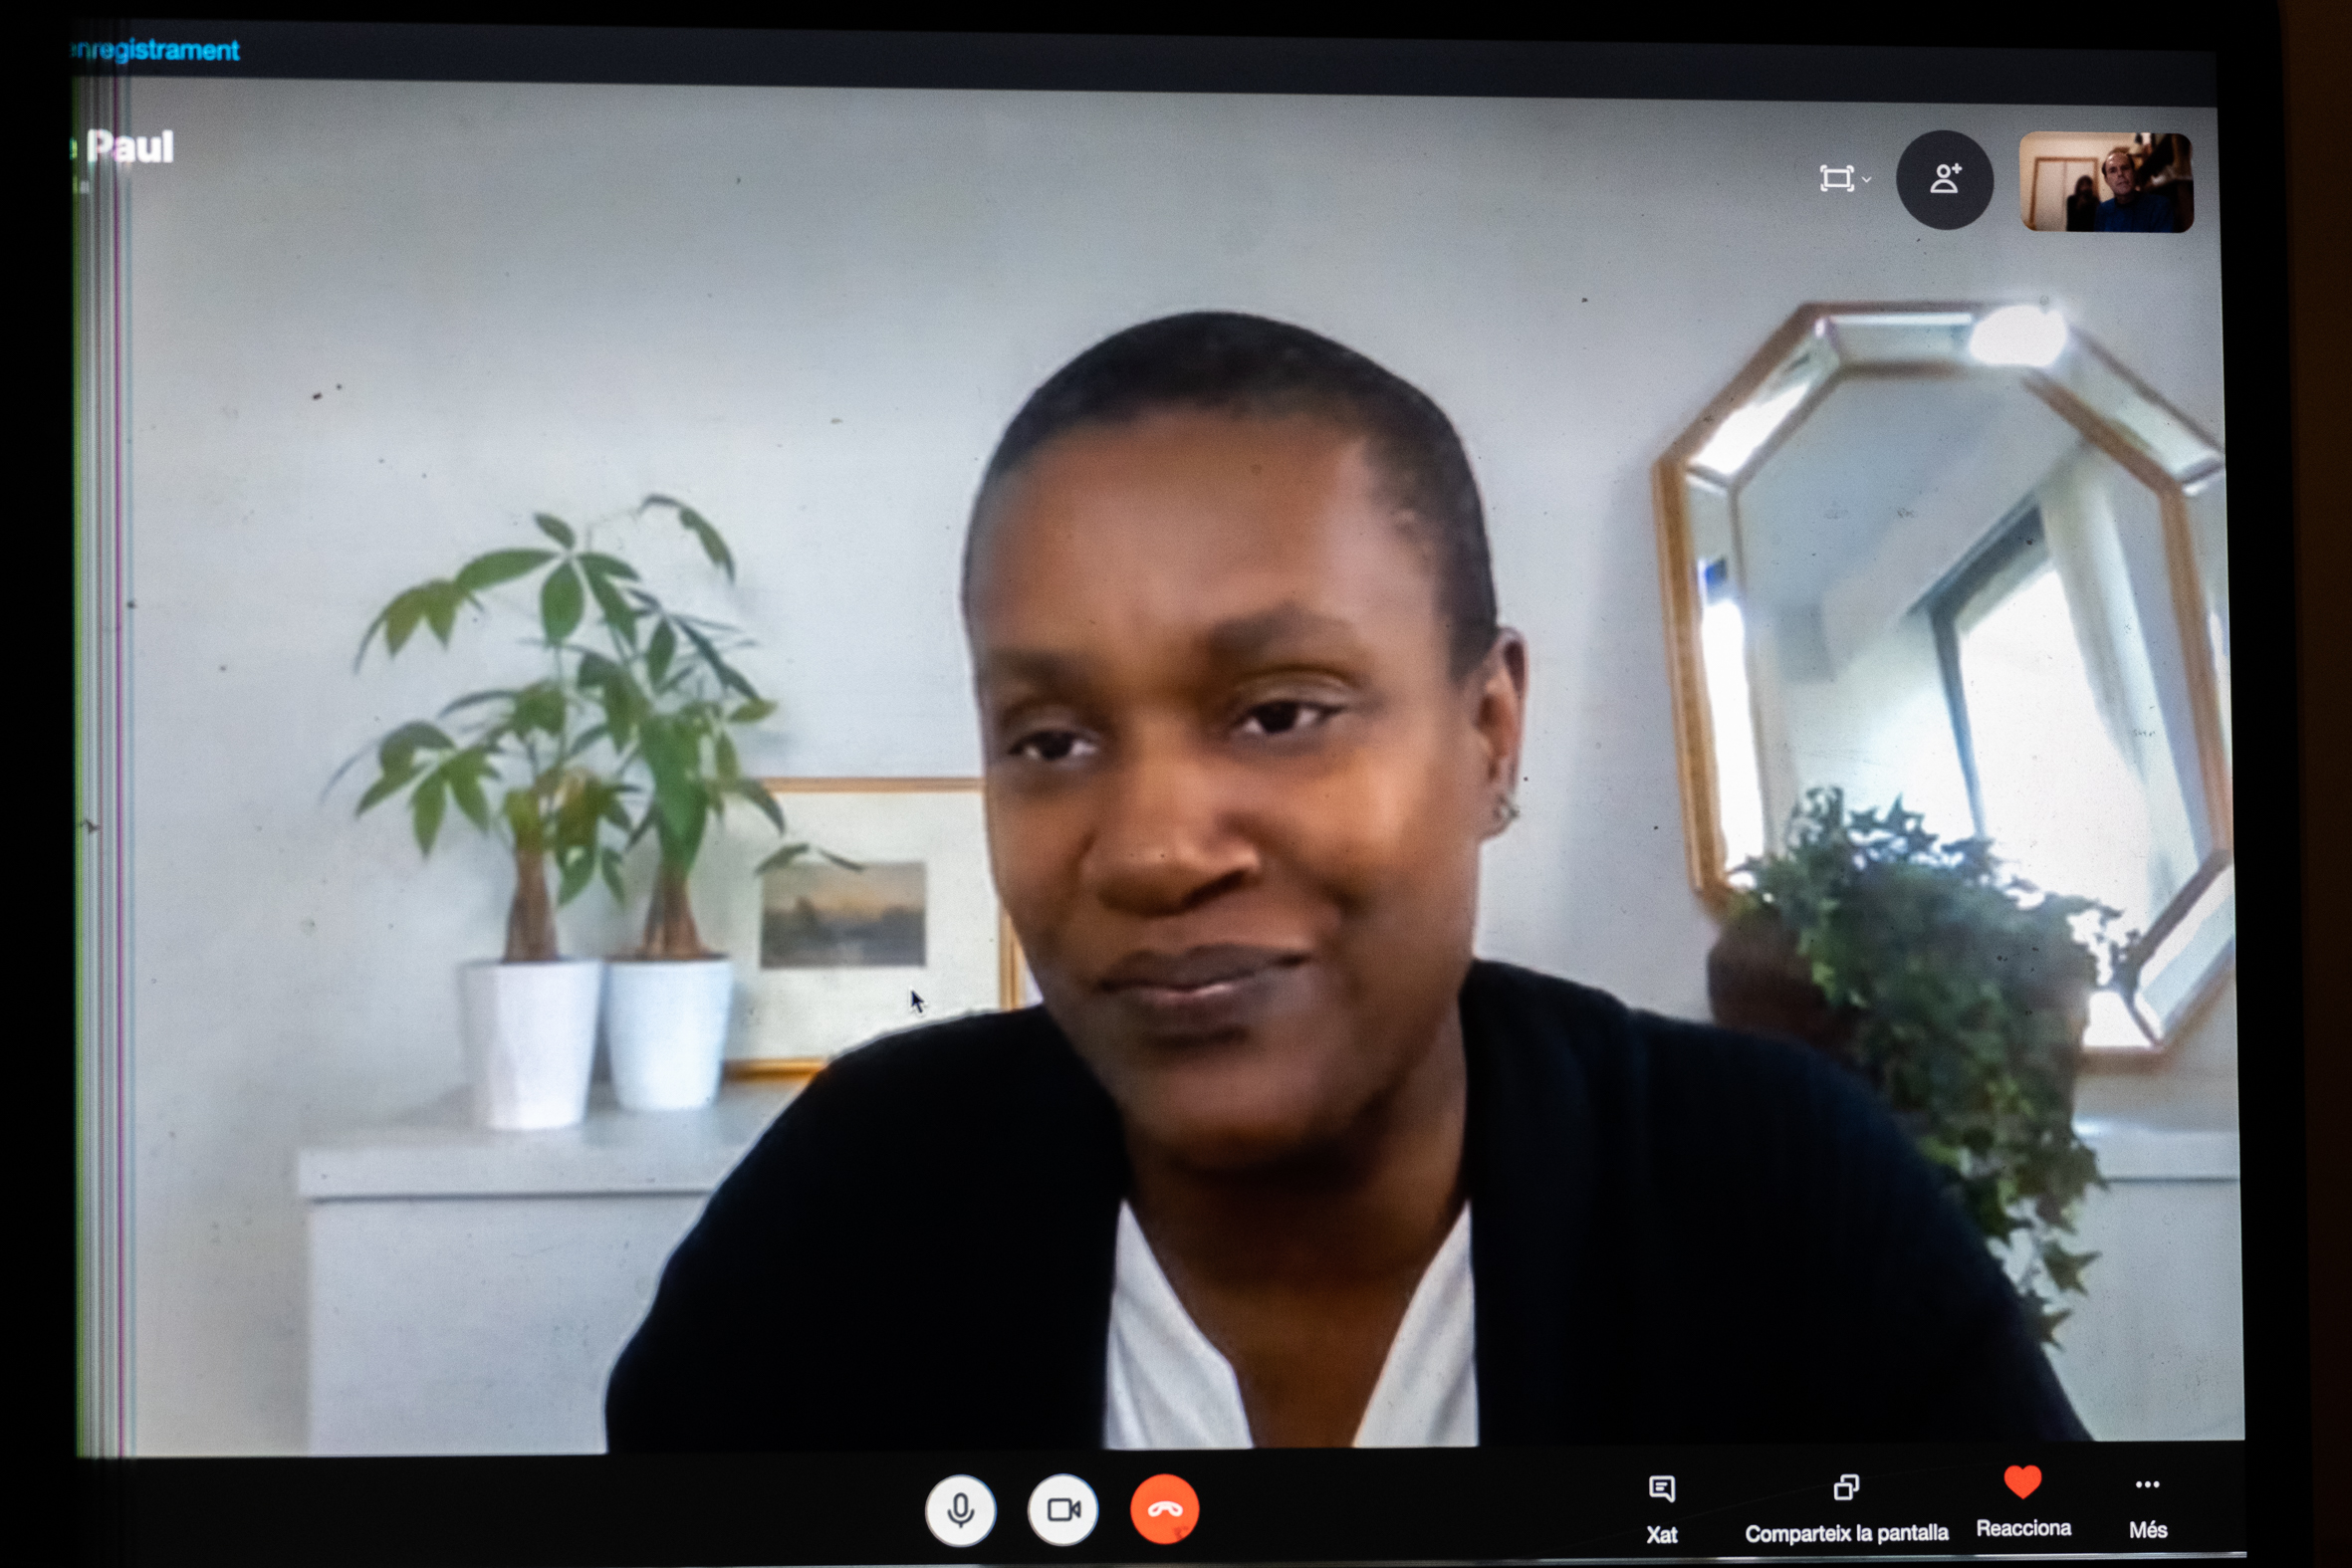 Annamie Paul, durant l'entrevista per Skype feta la setmana passada (Foto: Adiva Koenigsberg)